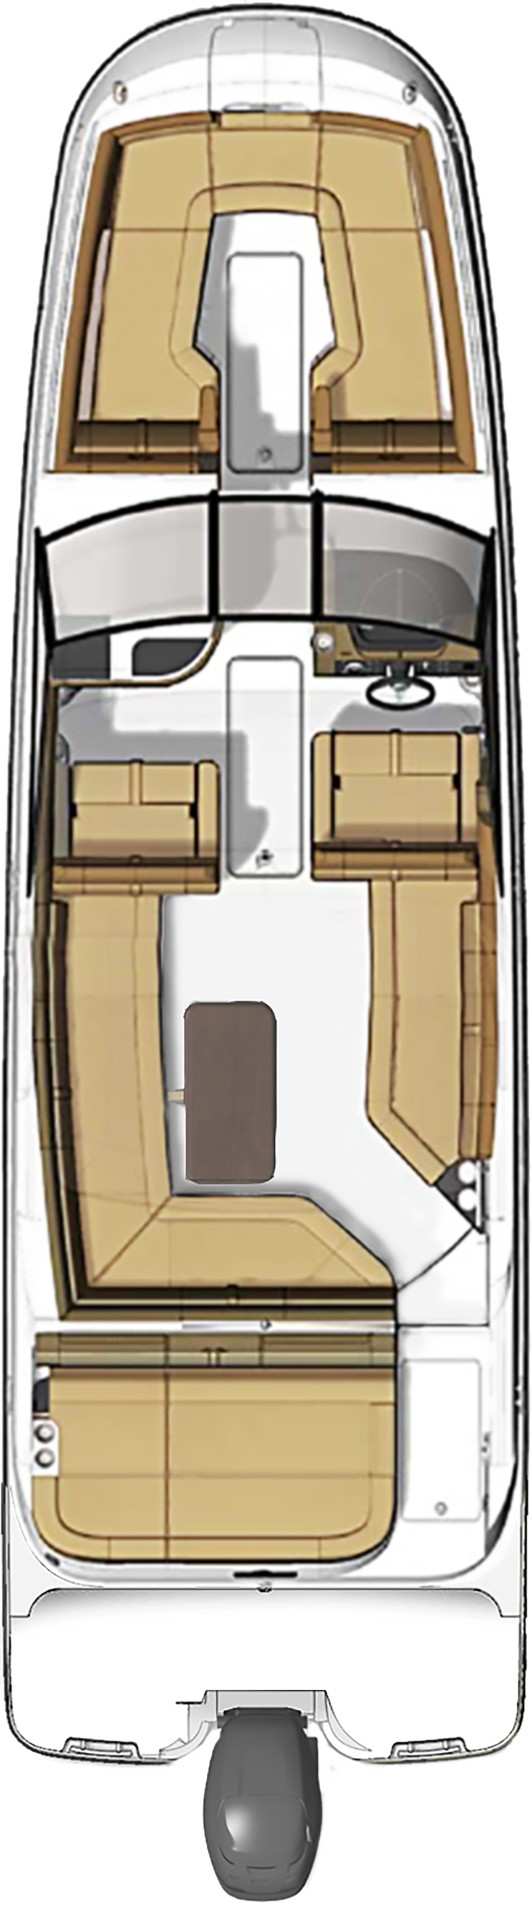 SDX 270 Outboard floor plan